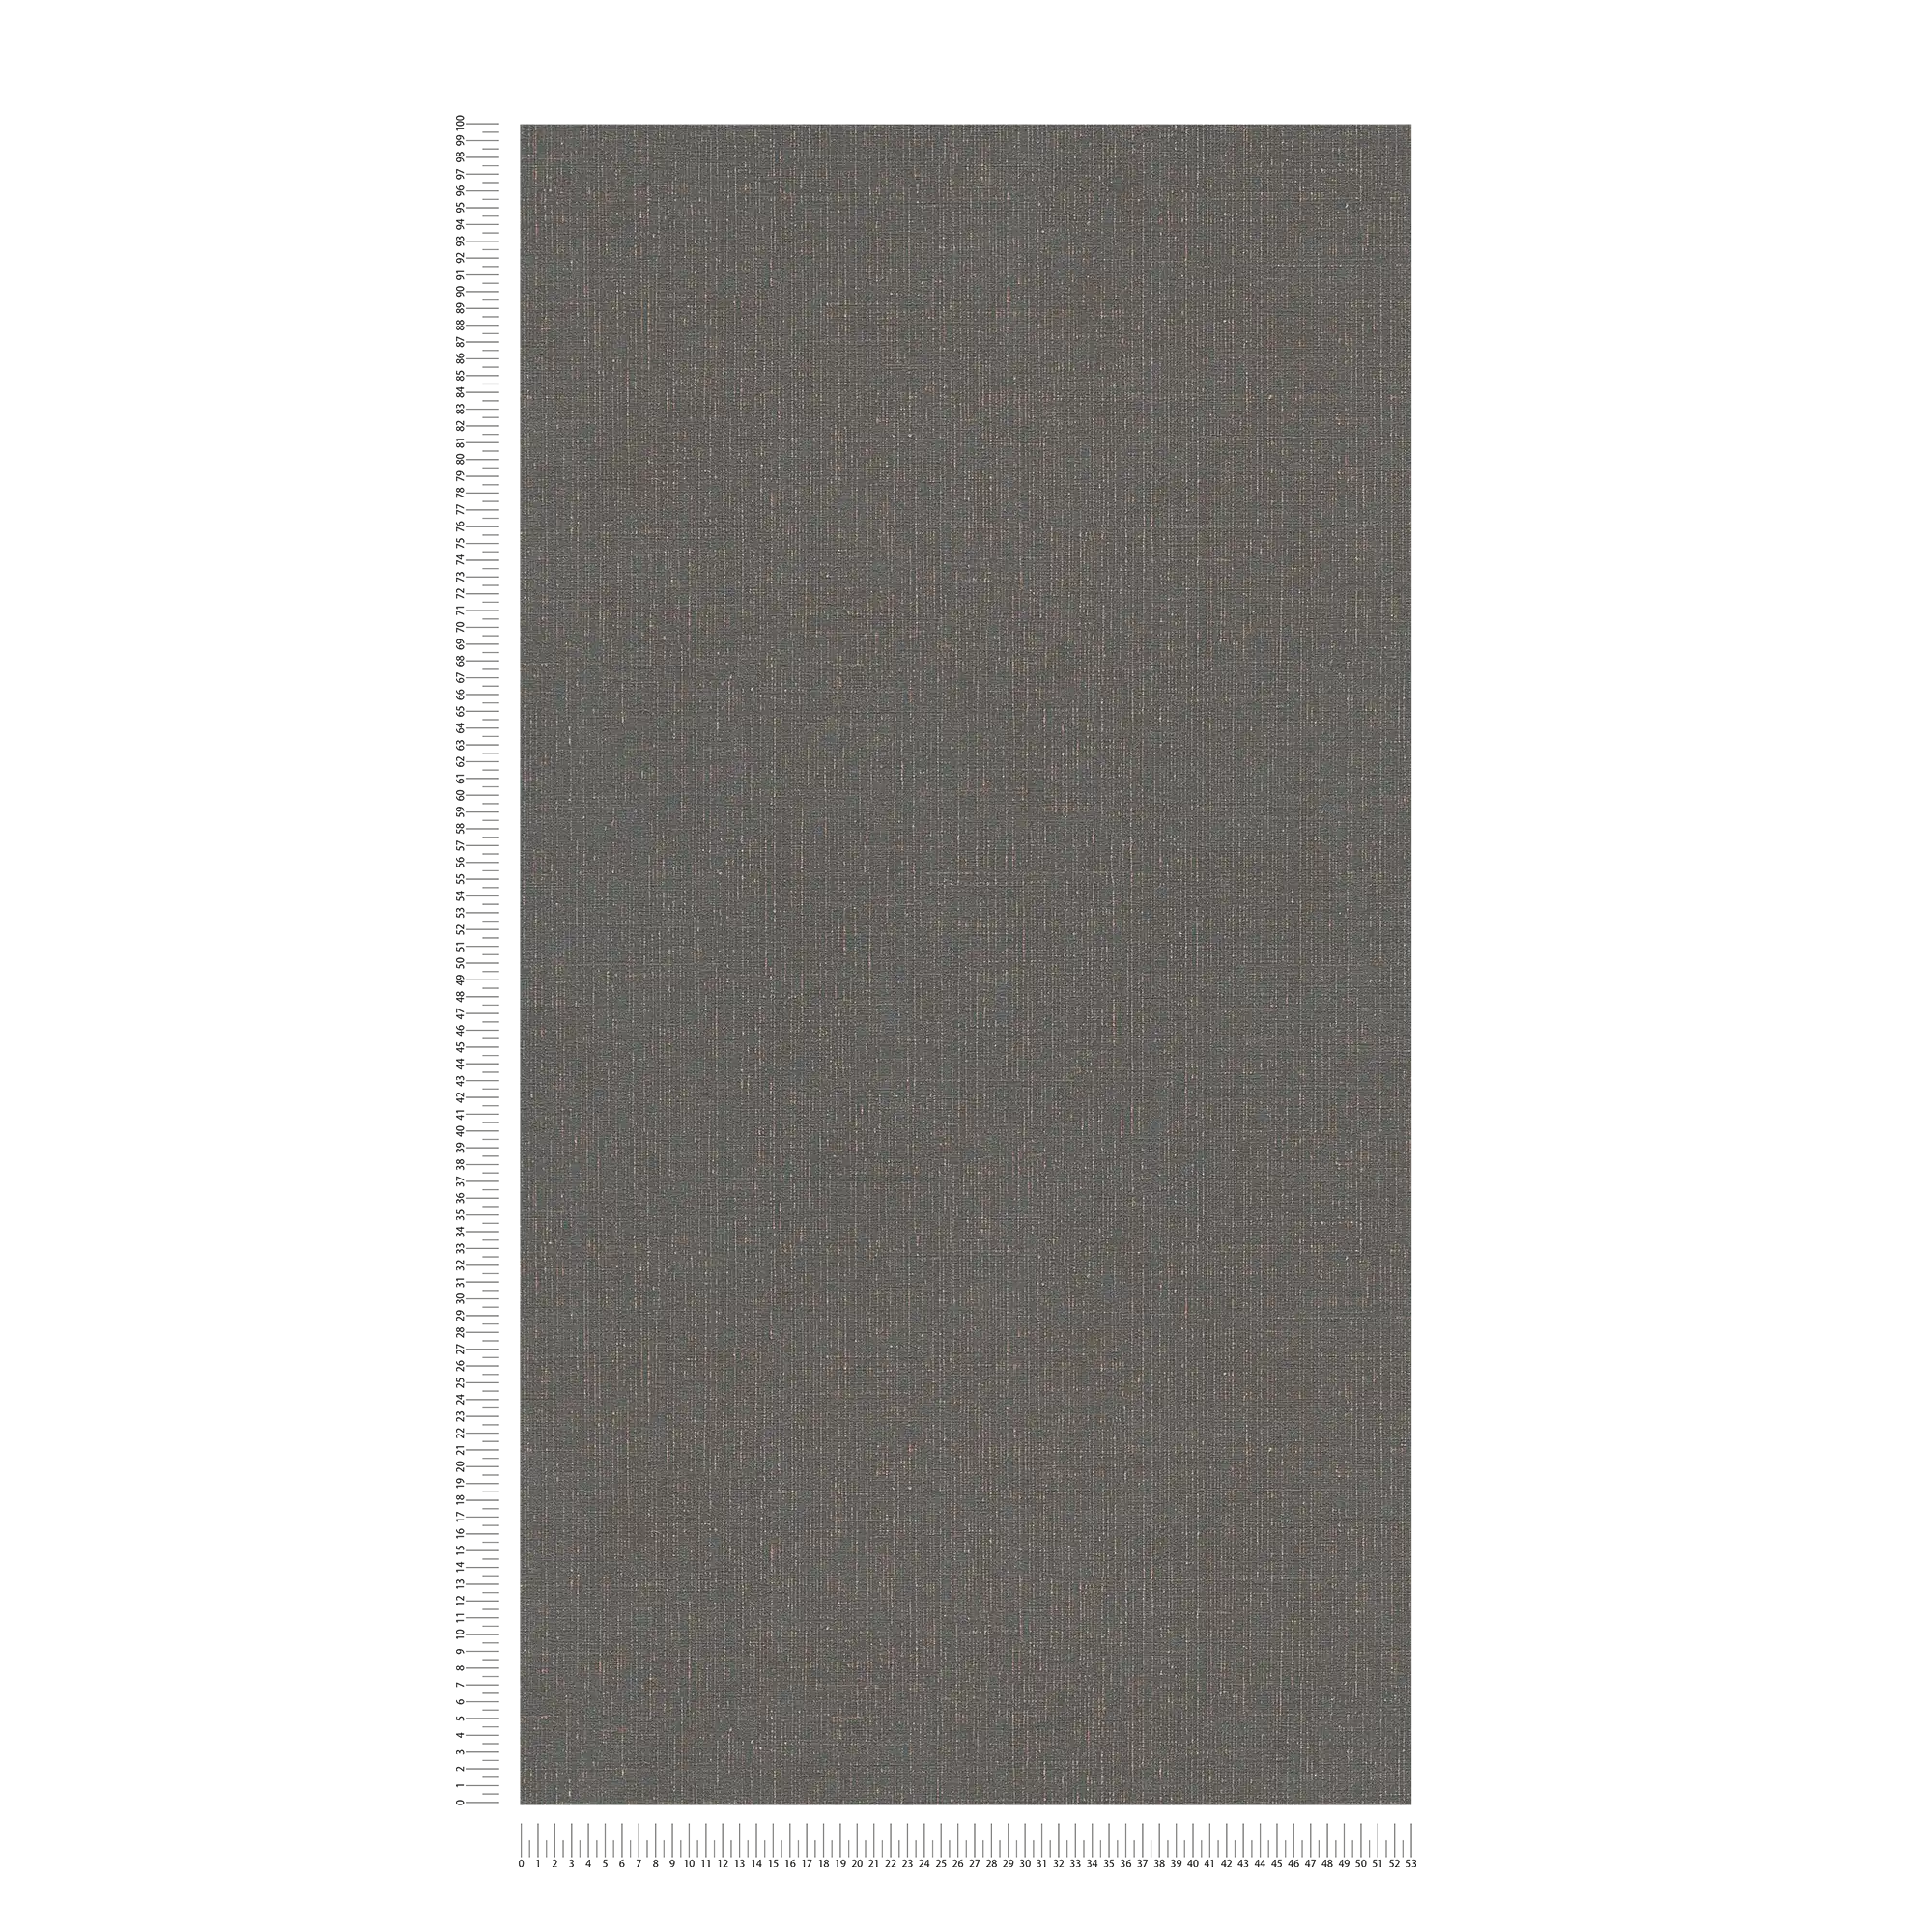             Papel pintado de aspecto textil antracita con estructura de lino - negro, gris
        